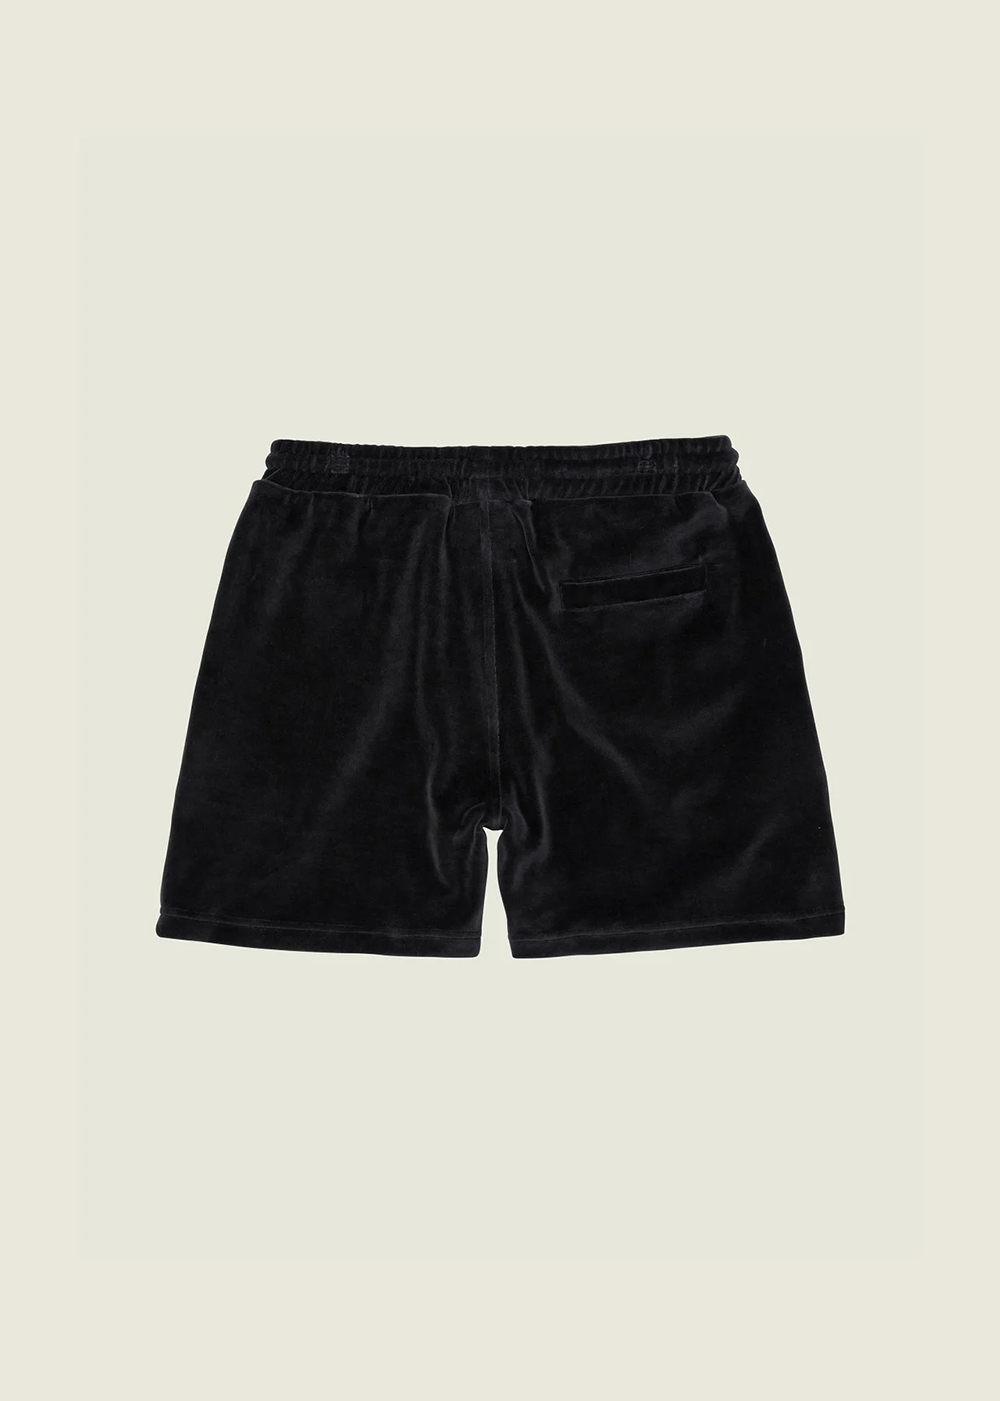 Black Velour Shorts - OAS Company - Danali